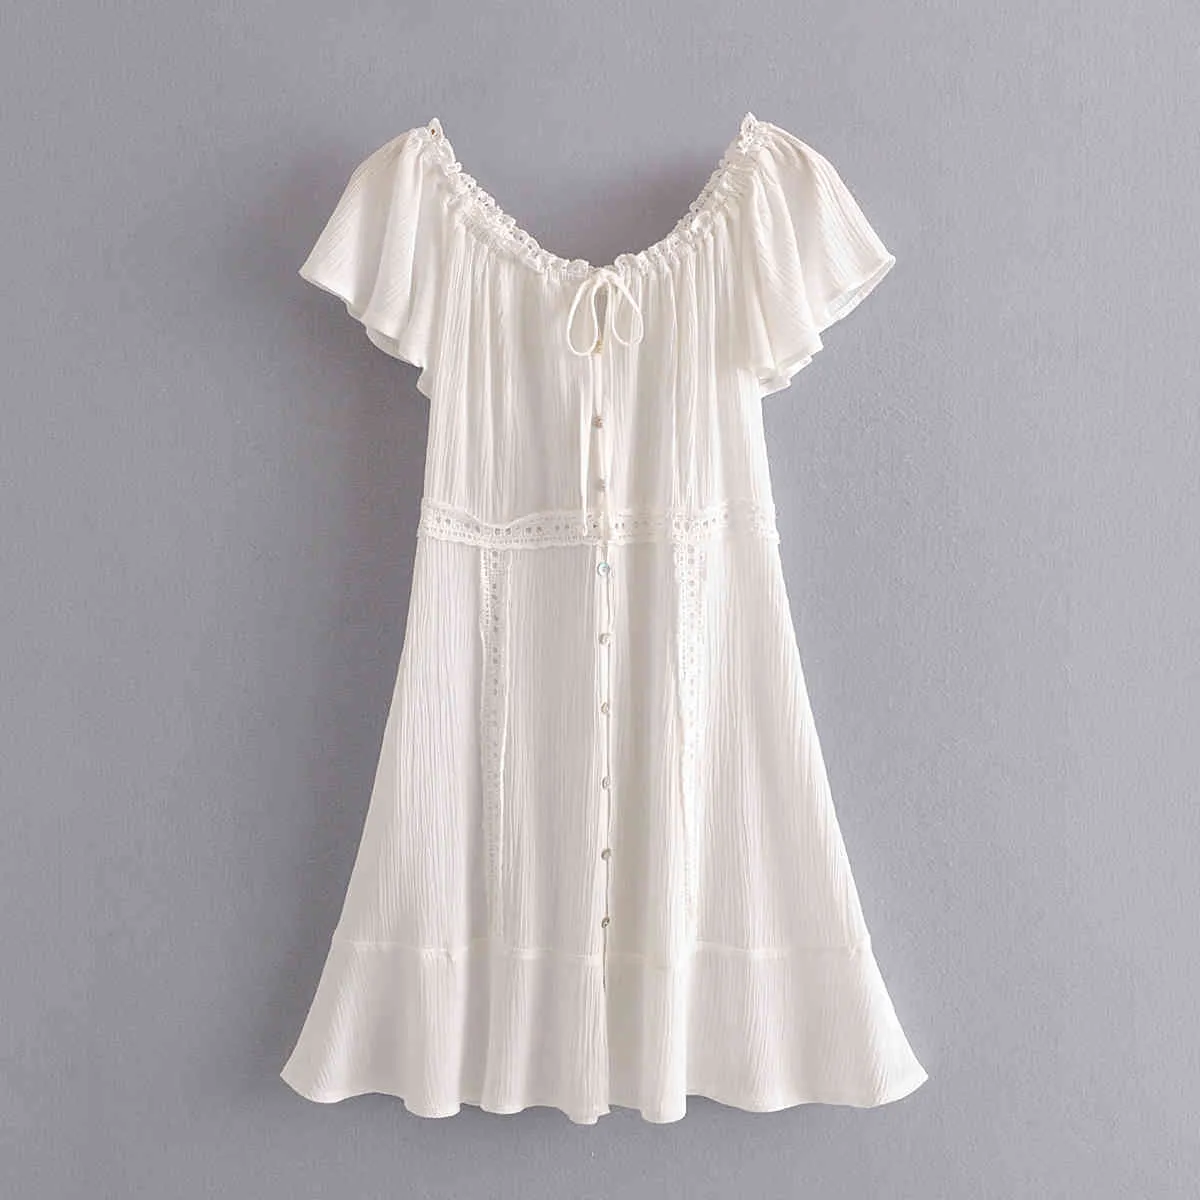 Foridol Off Shoulder White Embriodery Dress Summer Women Crochet Lace Up Beach Dress Button Flare Sleeve Cotton Dress Vestidos 210415